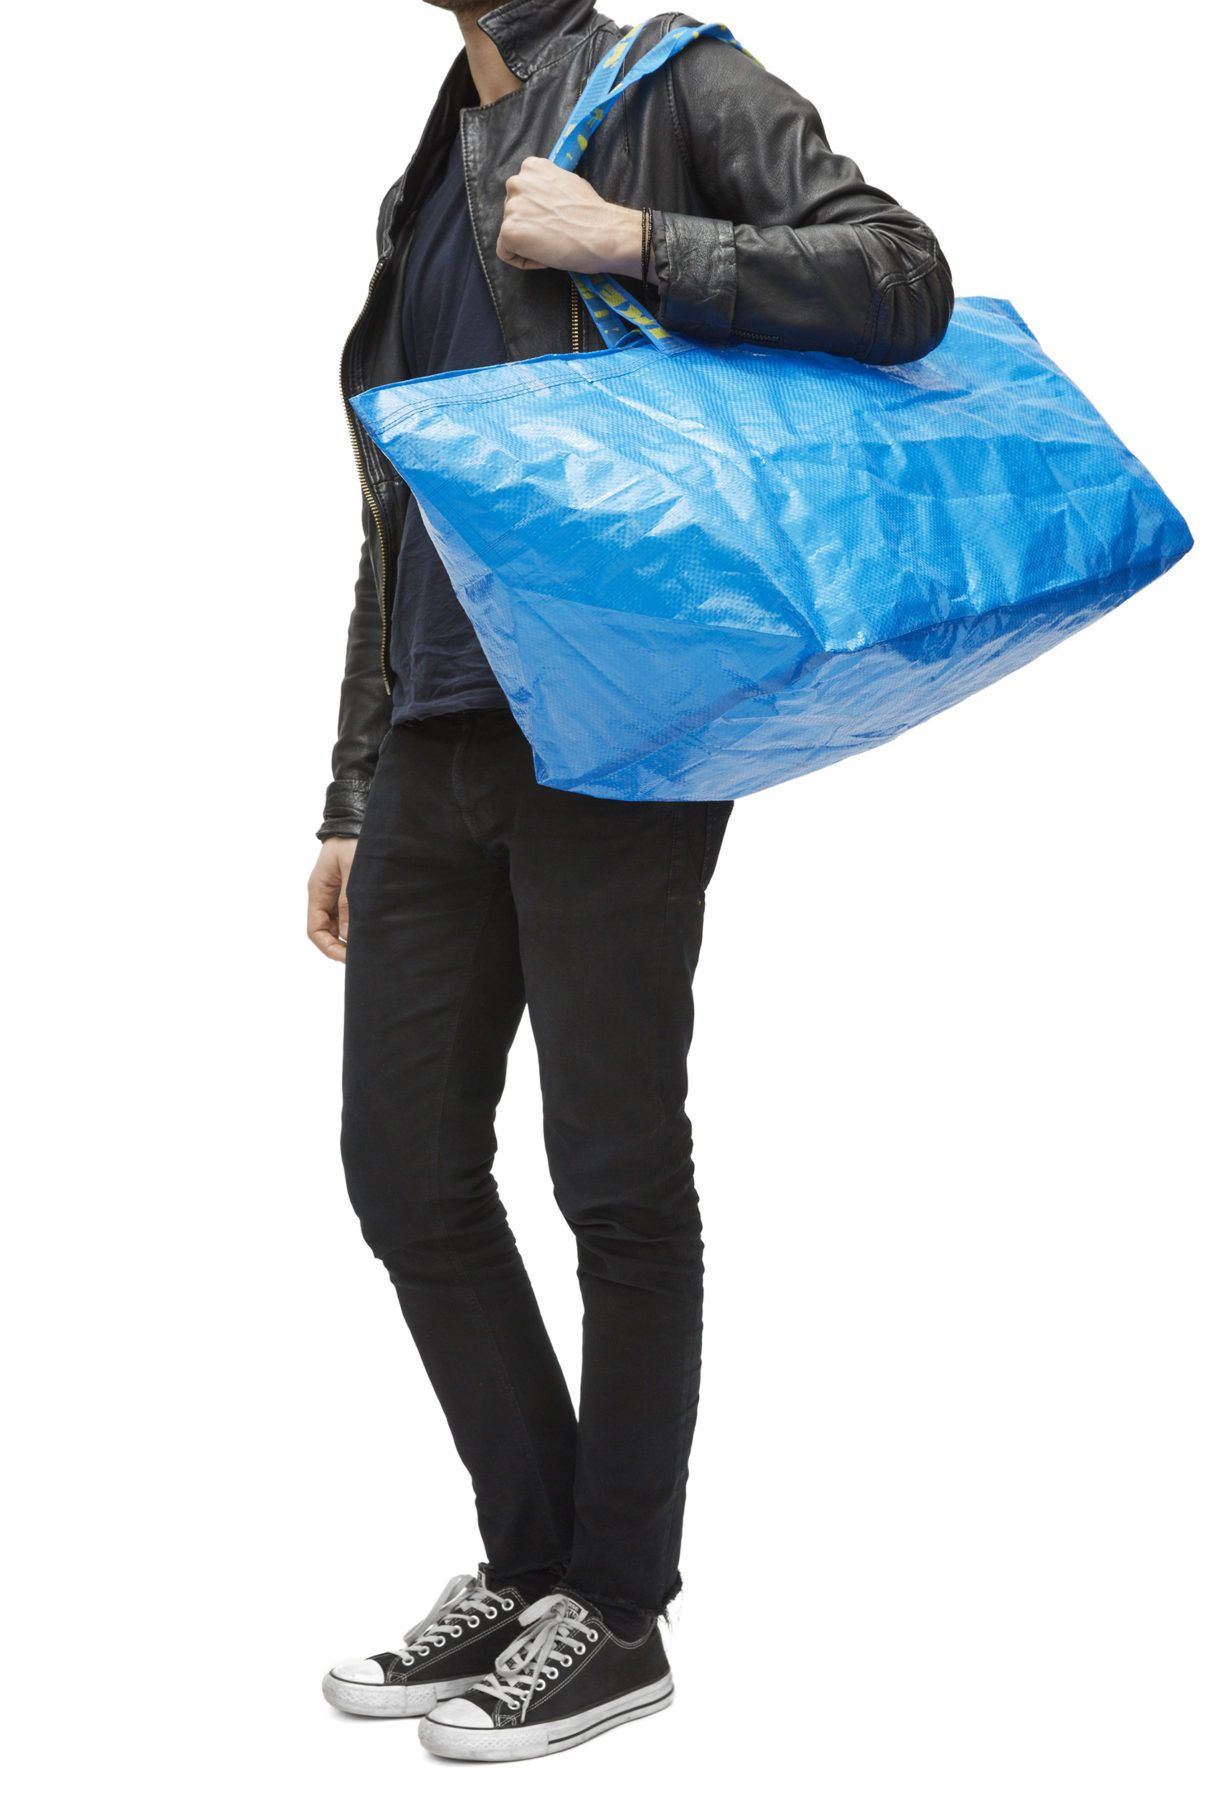 Balenciagas Arena ExtraLarge Shopper Tote Resembles Ikeas Frakta Bag   Grazia  Fashion  Grazia